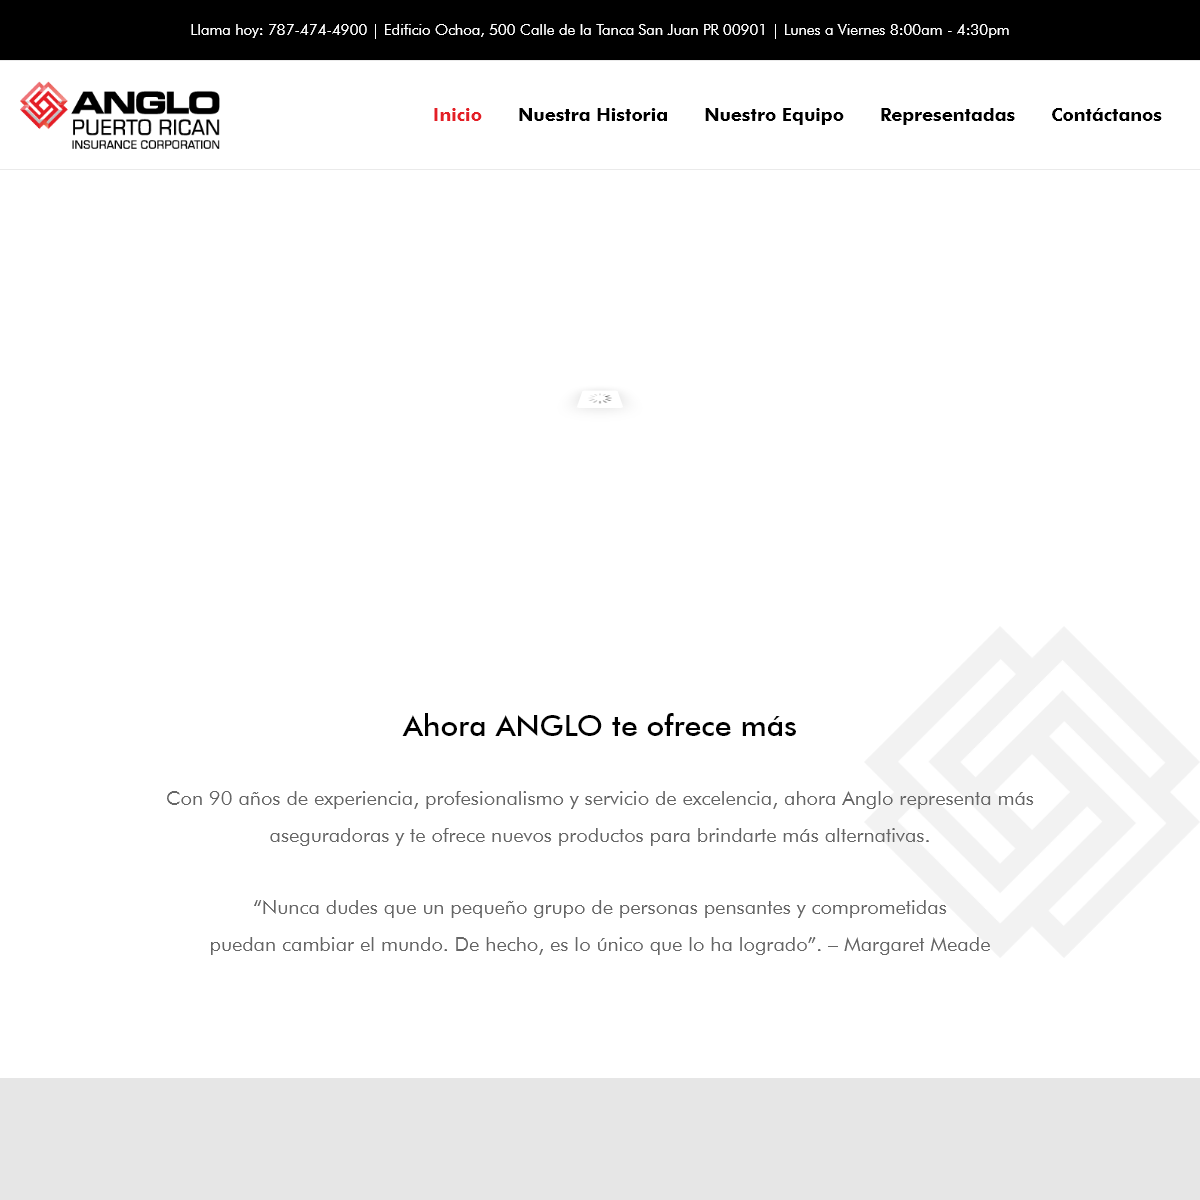 A complete backup of anglopr.com